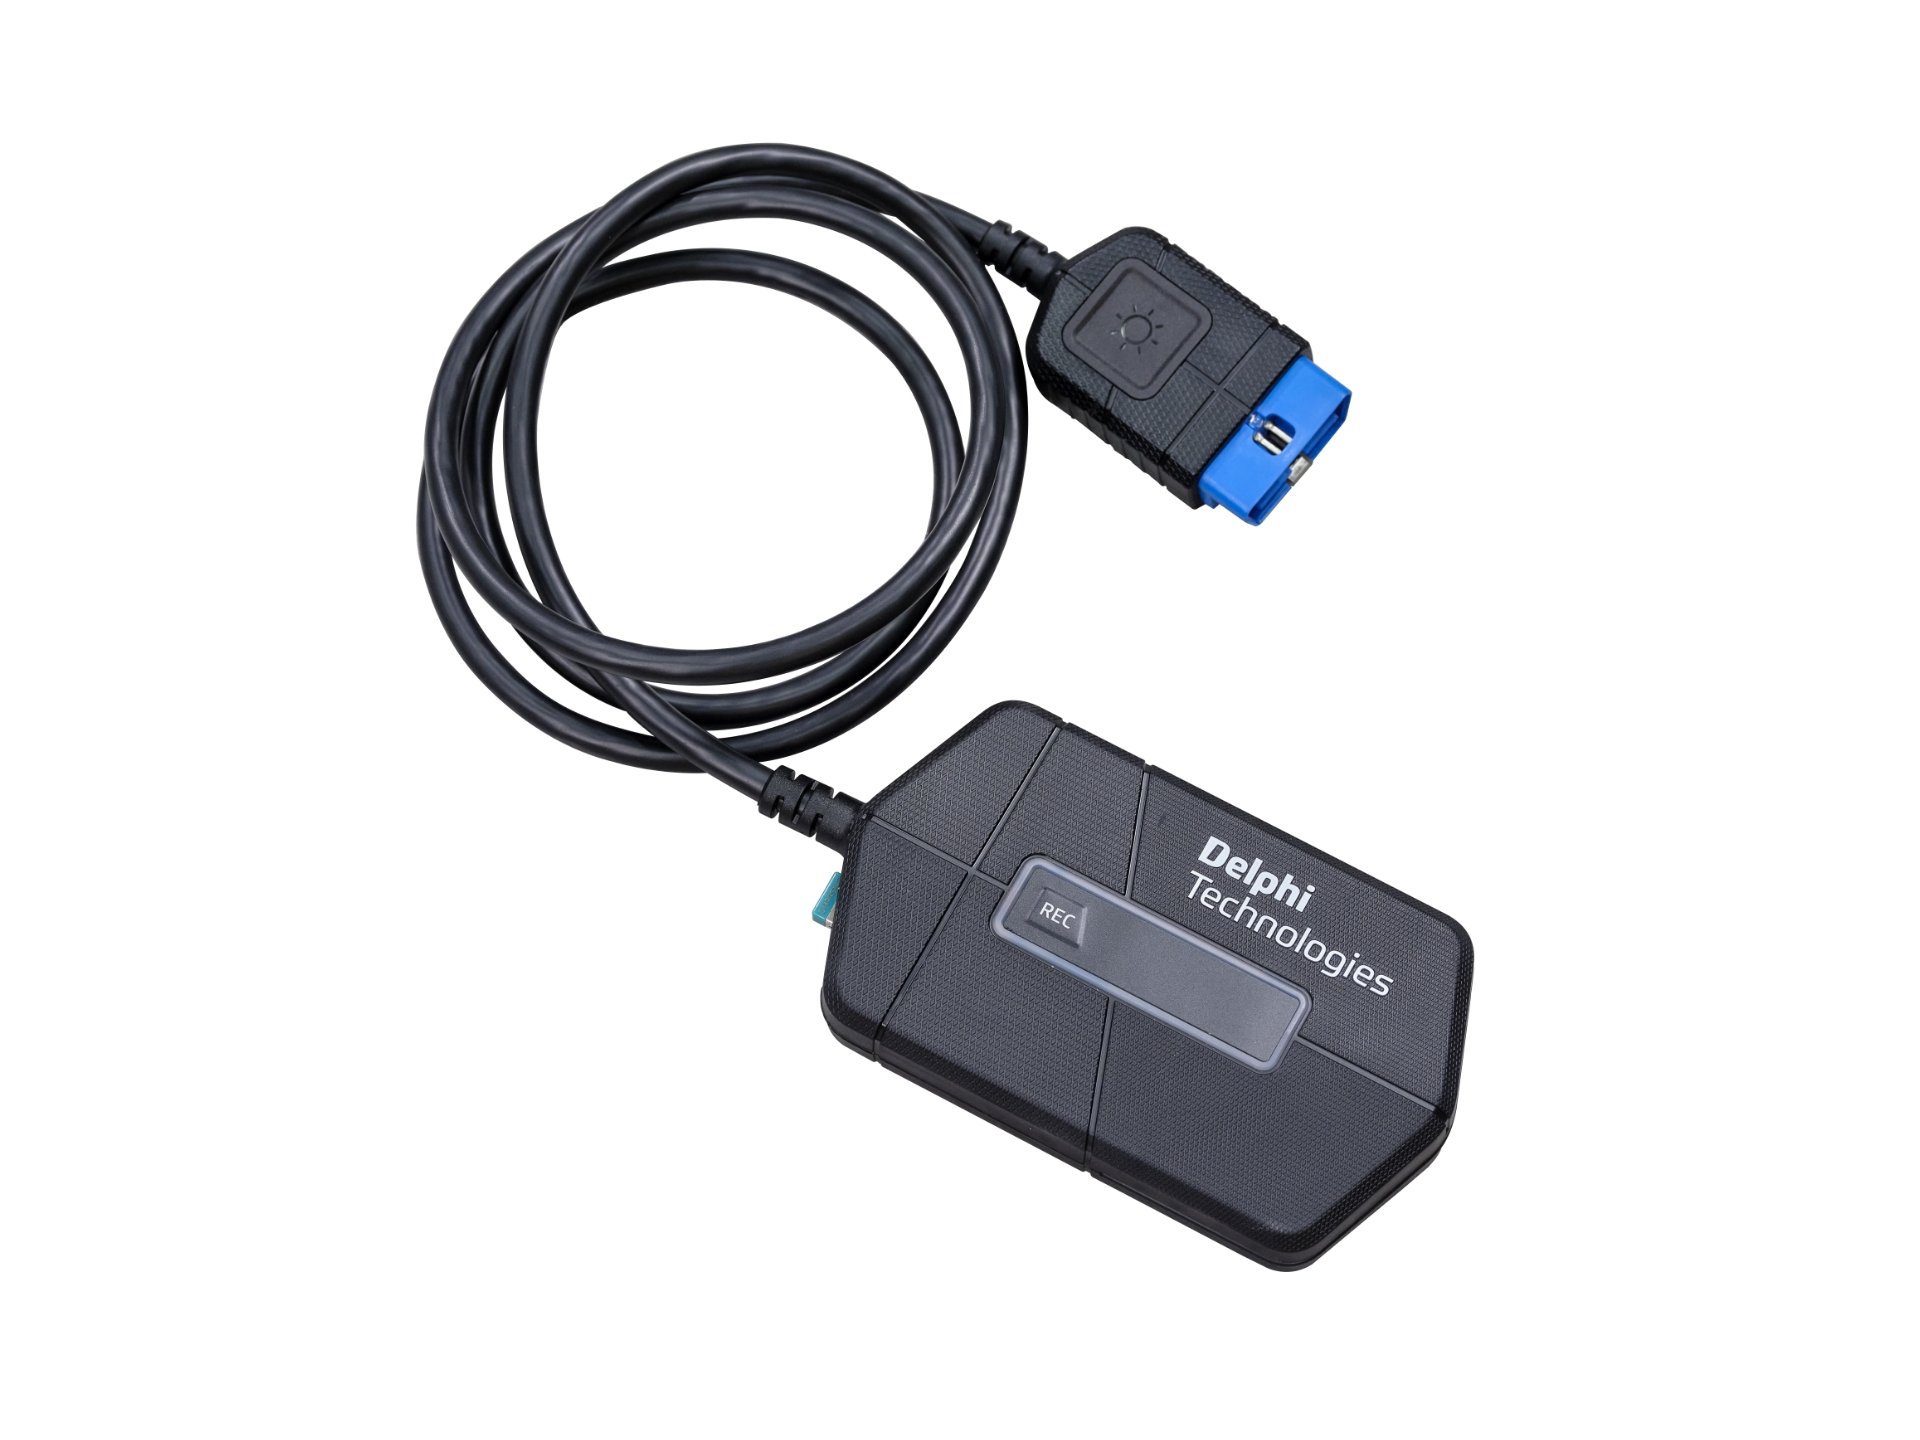 2015R3 Car Truck OBD Diagnostic Scanner Kits Bluetooth USB For DS150E  DELPHI Pro Car Truck Fiagnostic Tool + 8 car cable